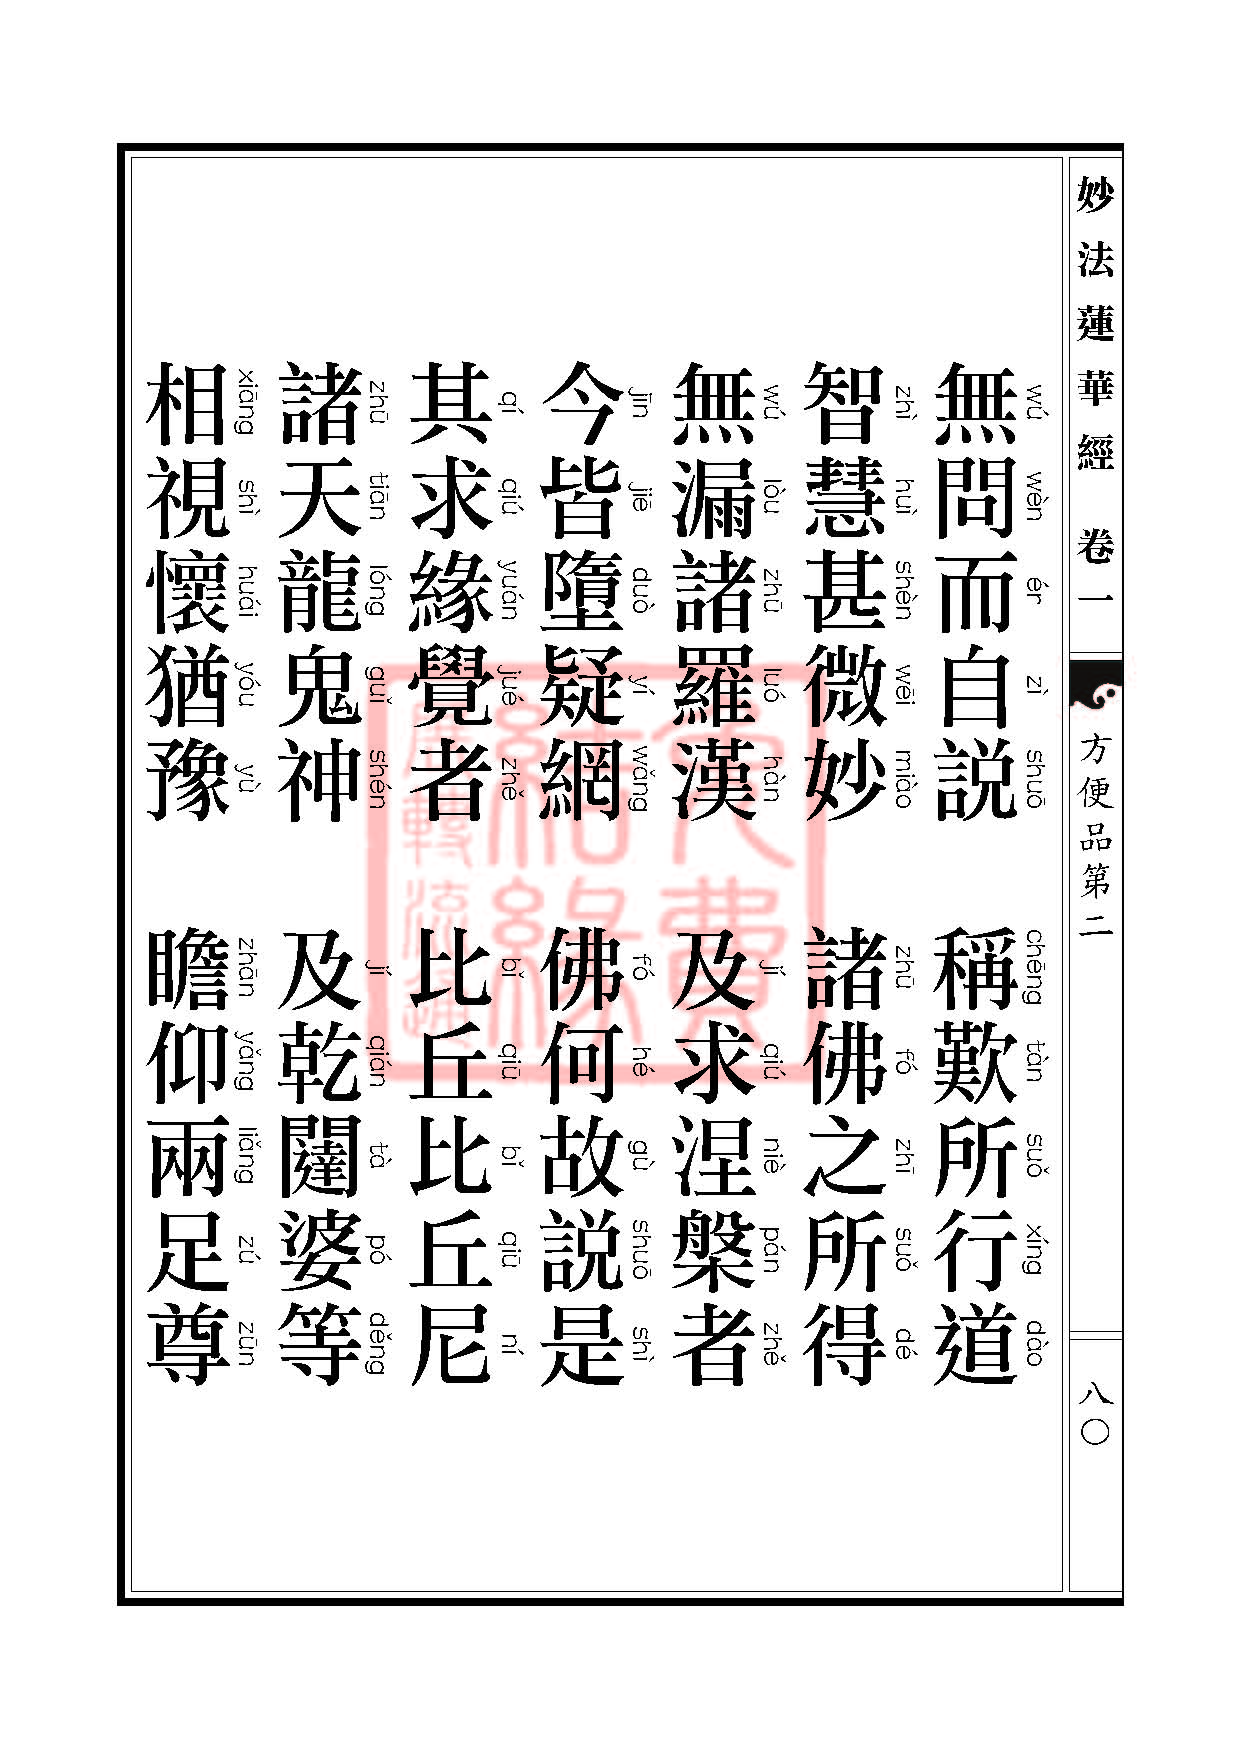 Book_FHJ_HK-A6-PY_Web_页面_080.jpg